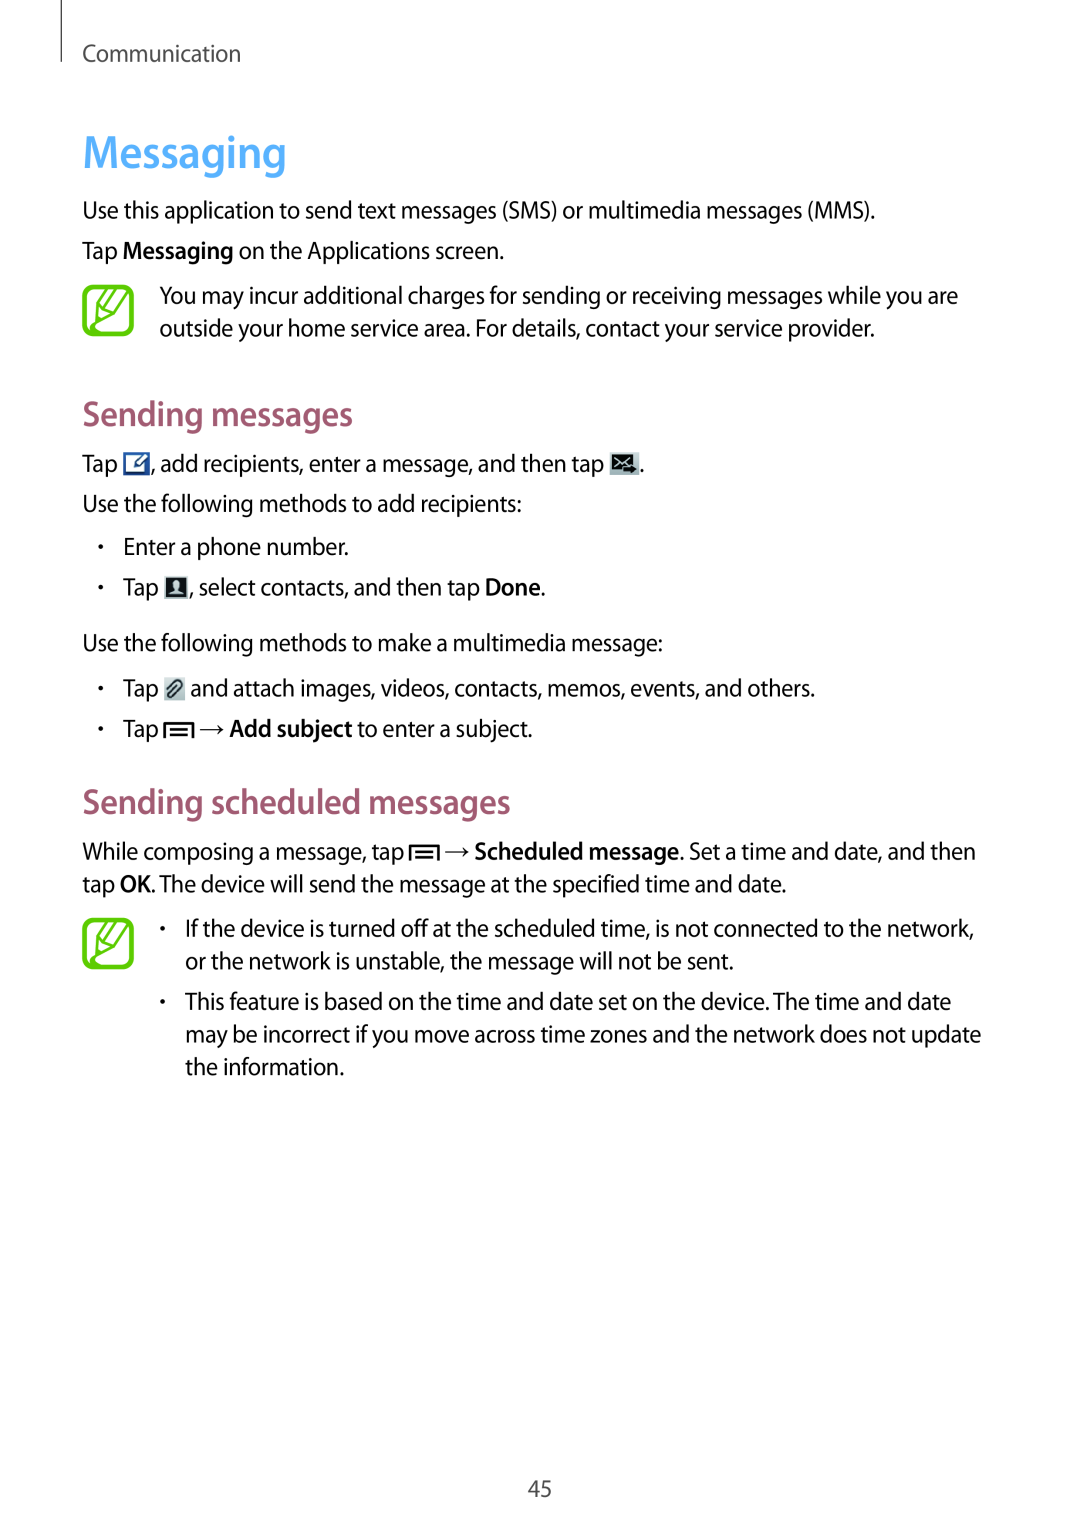 Samsung GT-S6790MKNITV, GT-S6790ZWYSEB manual Messaging, Sending messages, Sending scheduled messages, Communication 